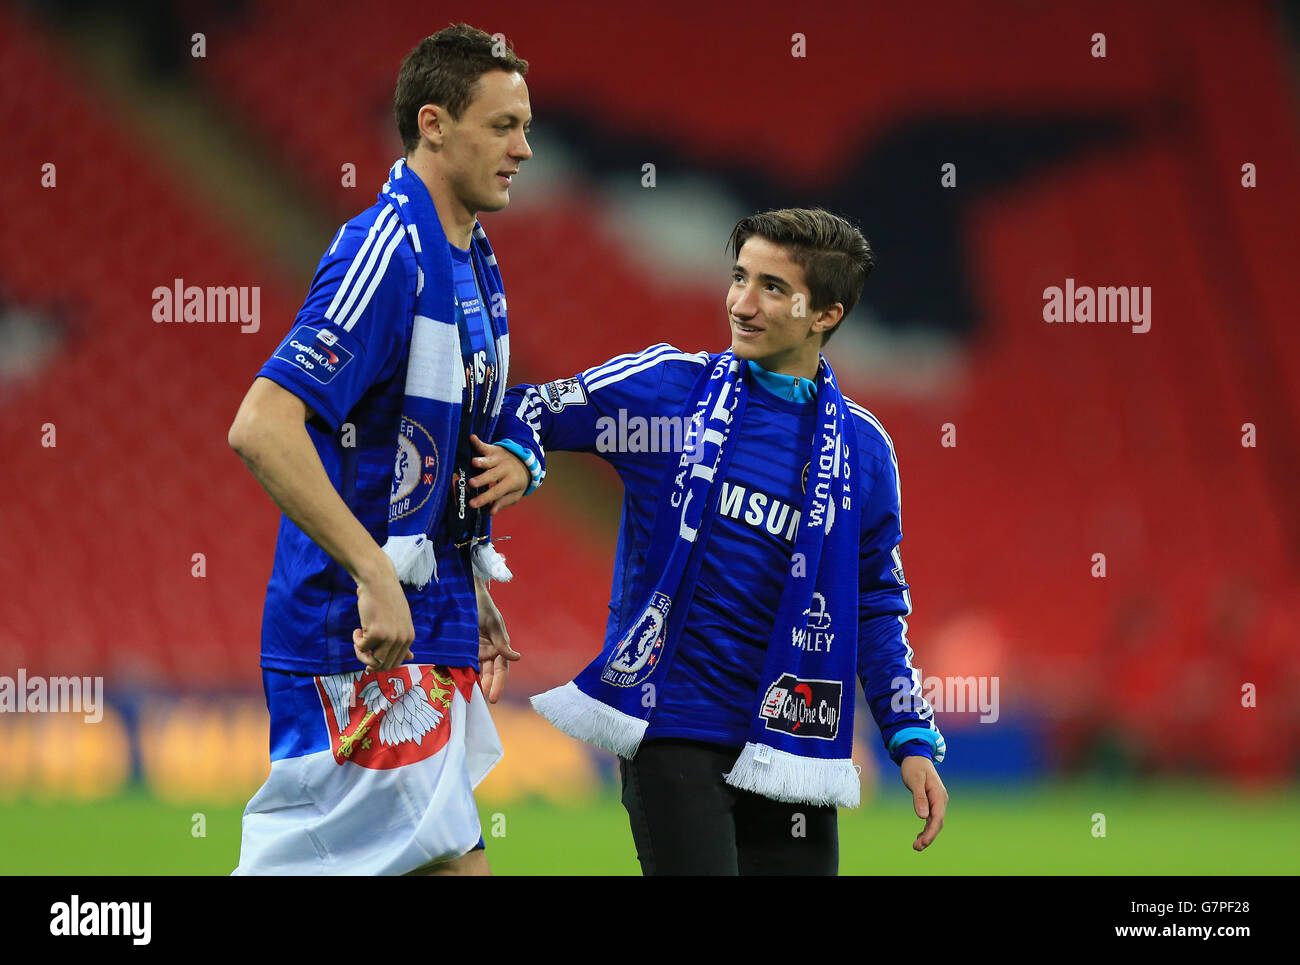 Chelsea's Nemanja Matic (left) with Chelsea manager Jose Mourinho's Son, Jose Mario Mourinho Jr. (right). Stock Photo